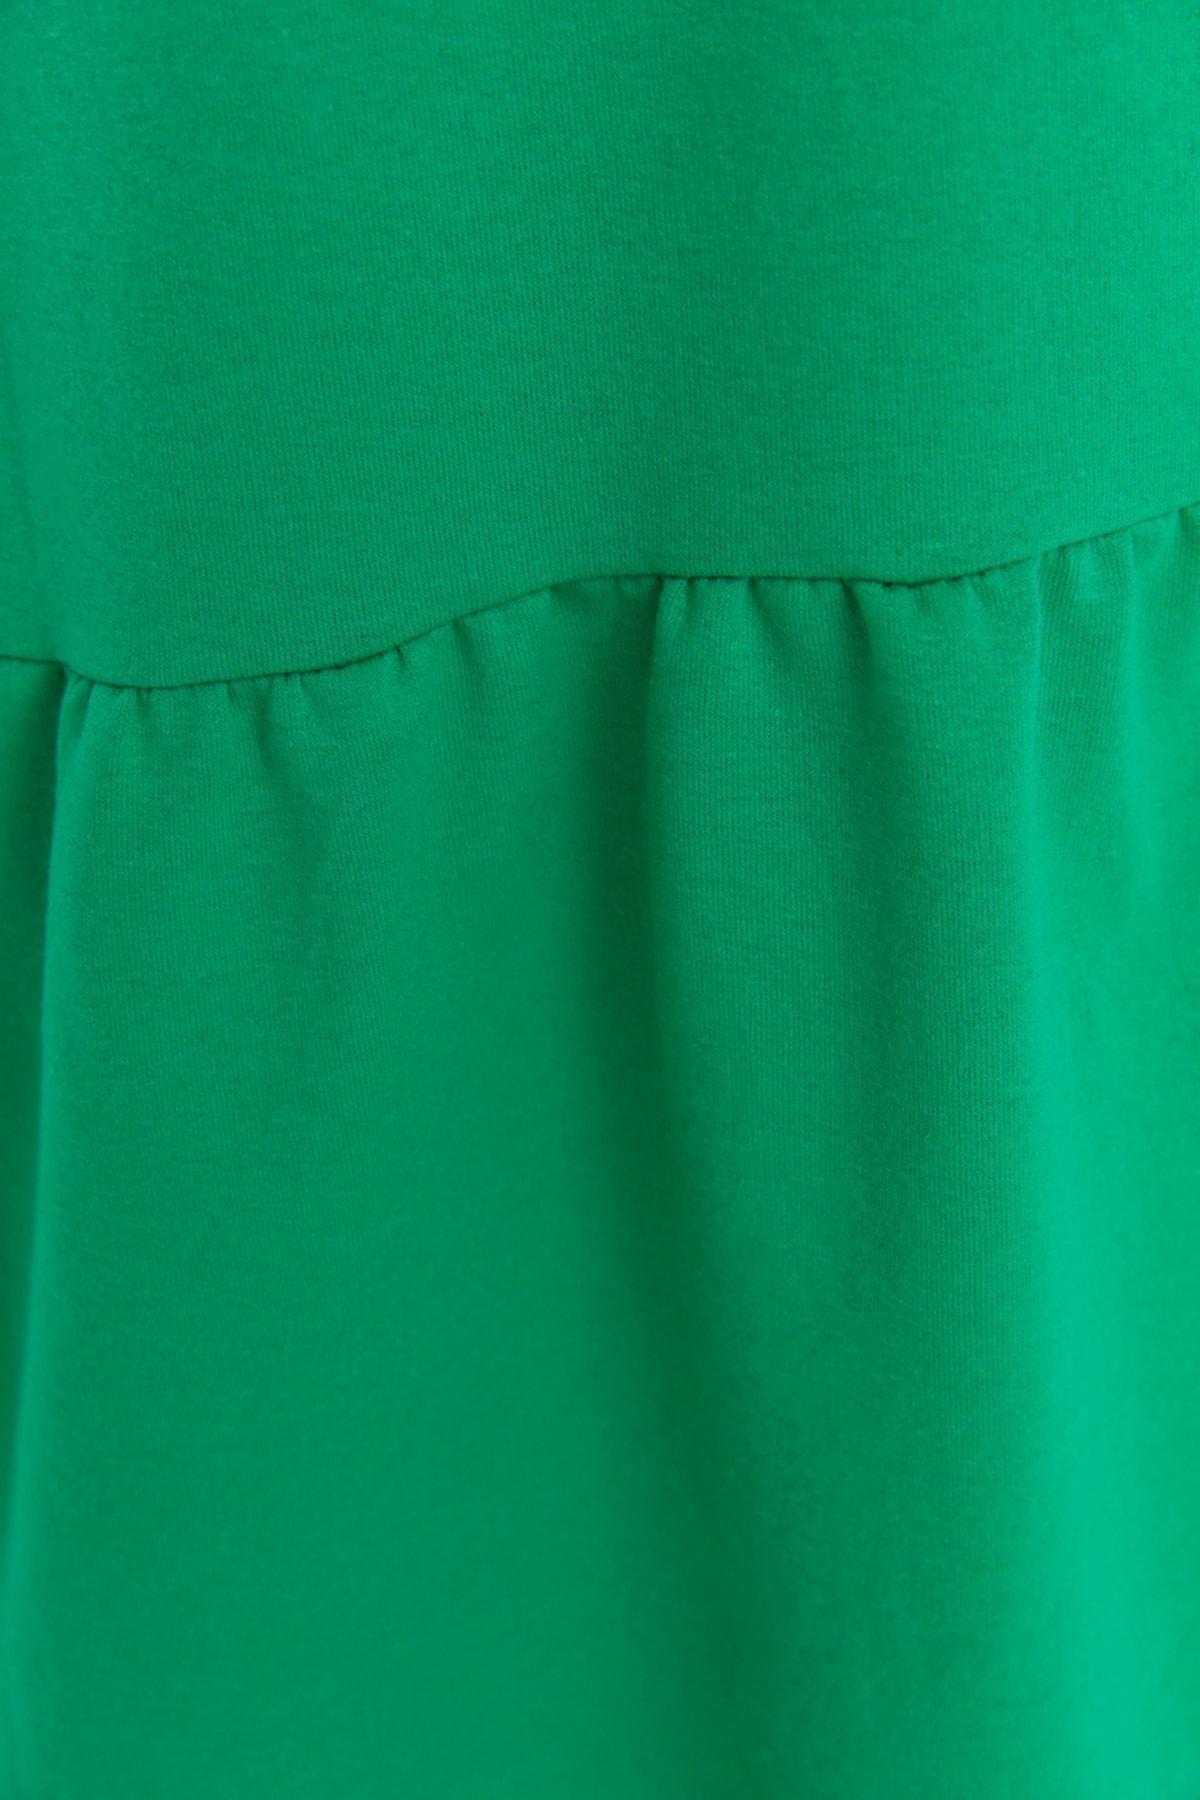 Trendyol - Green Smock Dress